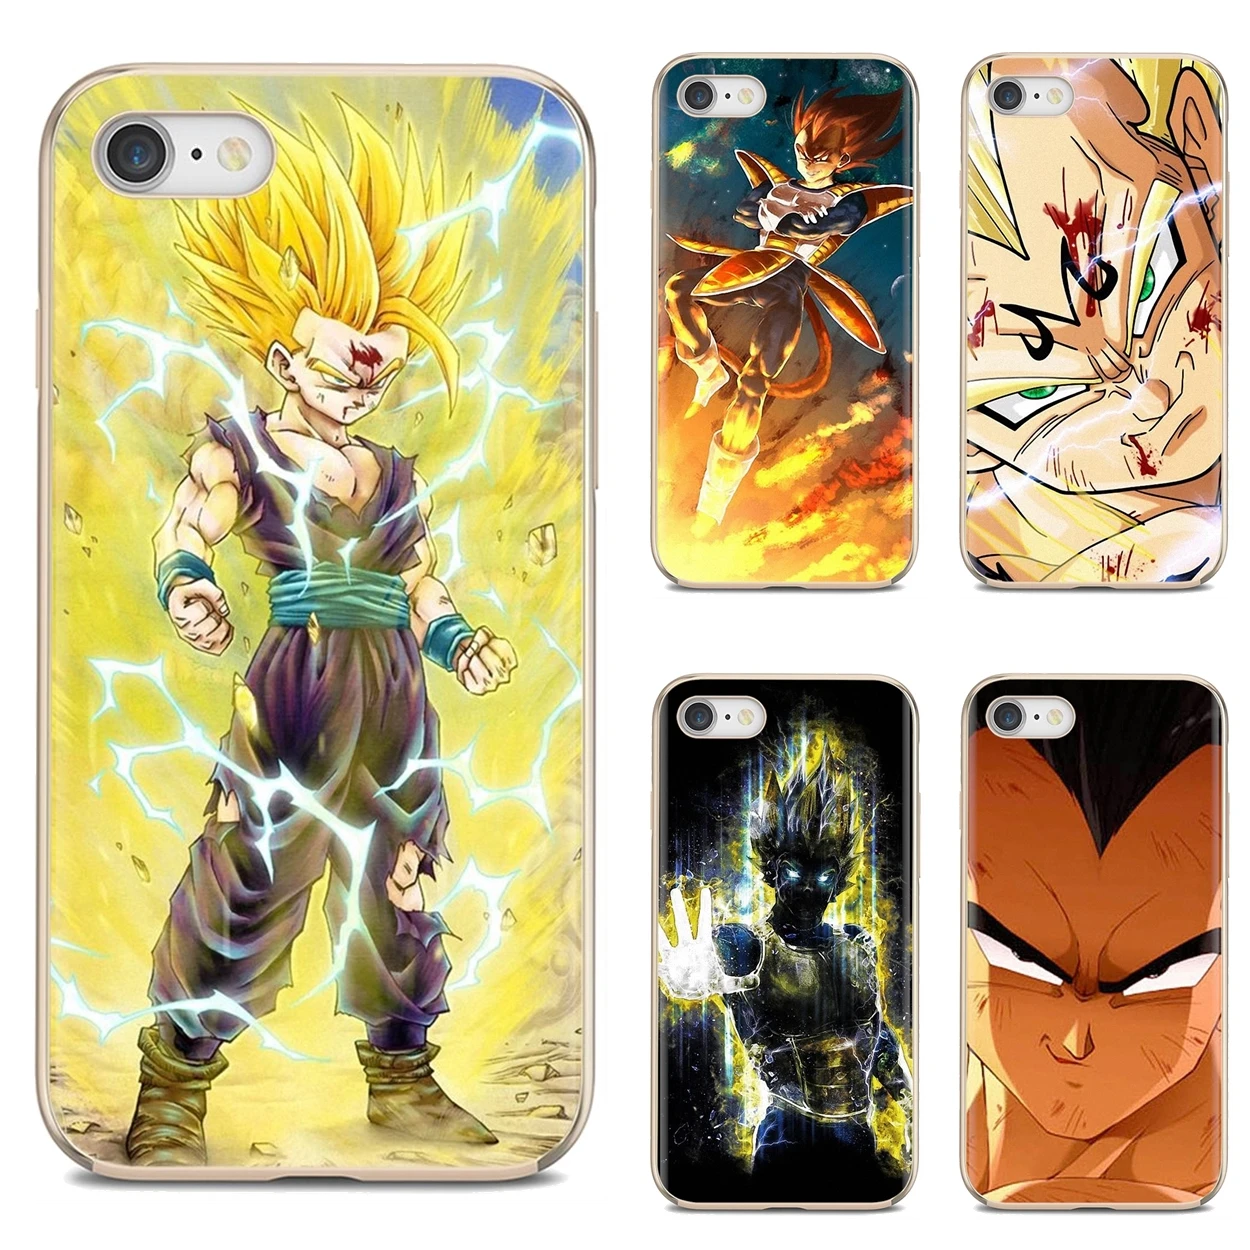 

Dragon Ball Z Vegeta Bad Man Saiyan For iPhone 10 11 12 13 Mini Pro 4S 5S SE 5C 6 6S 7 8 X XR XS Plus Max 2020 Soft Shell Cover